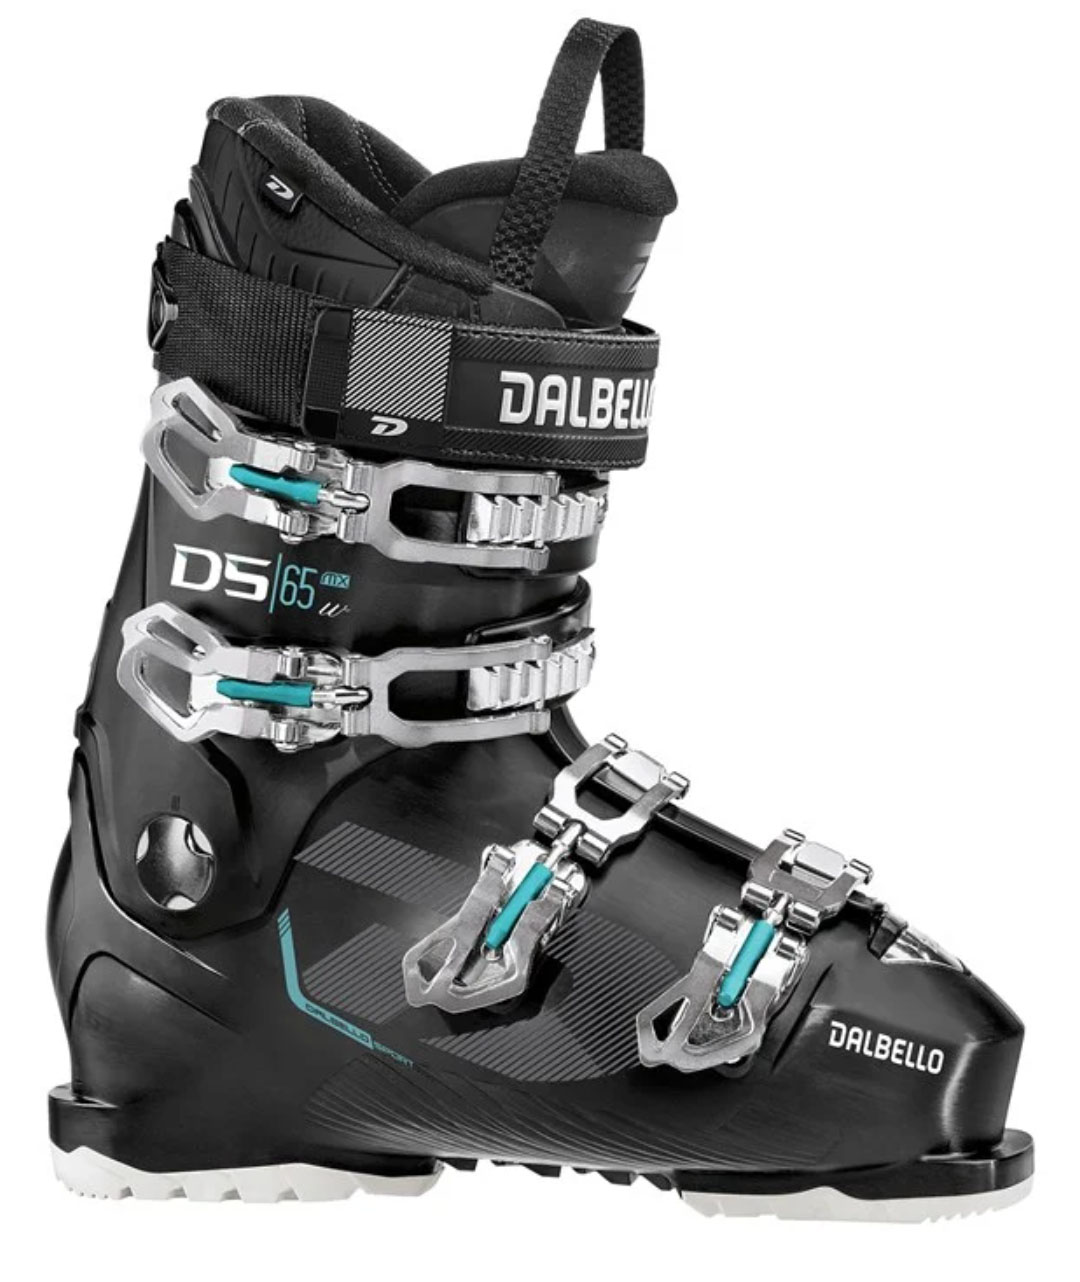 Dalbello DS MX 65 W women's ski boot